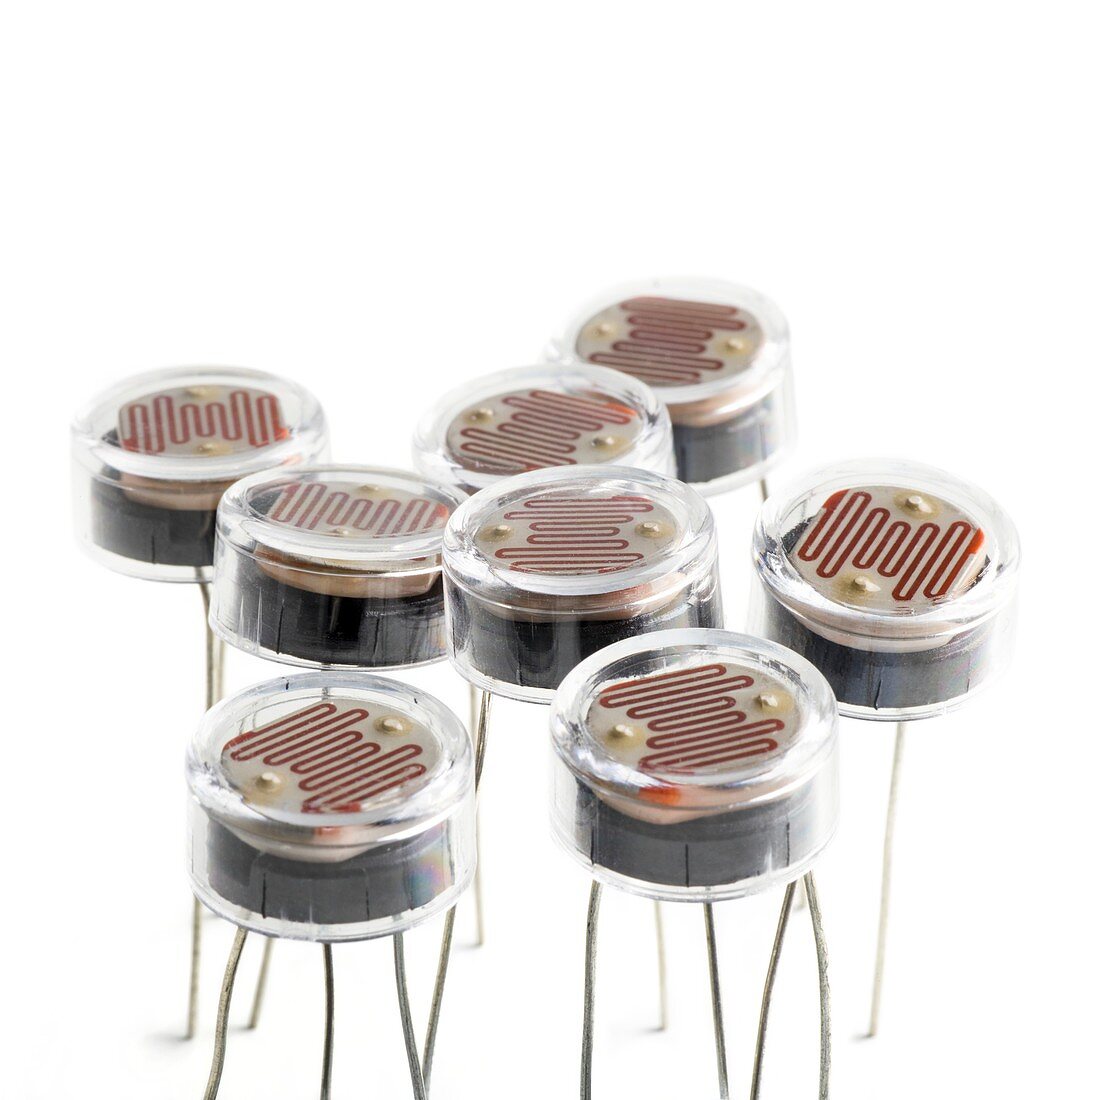 Light dependent resistors